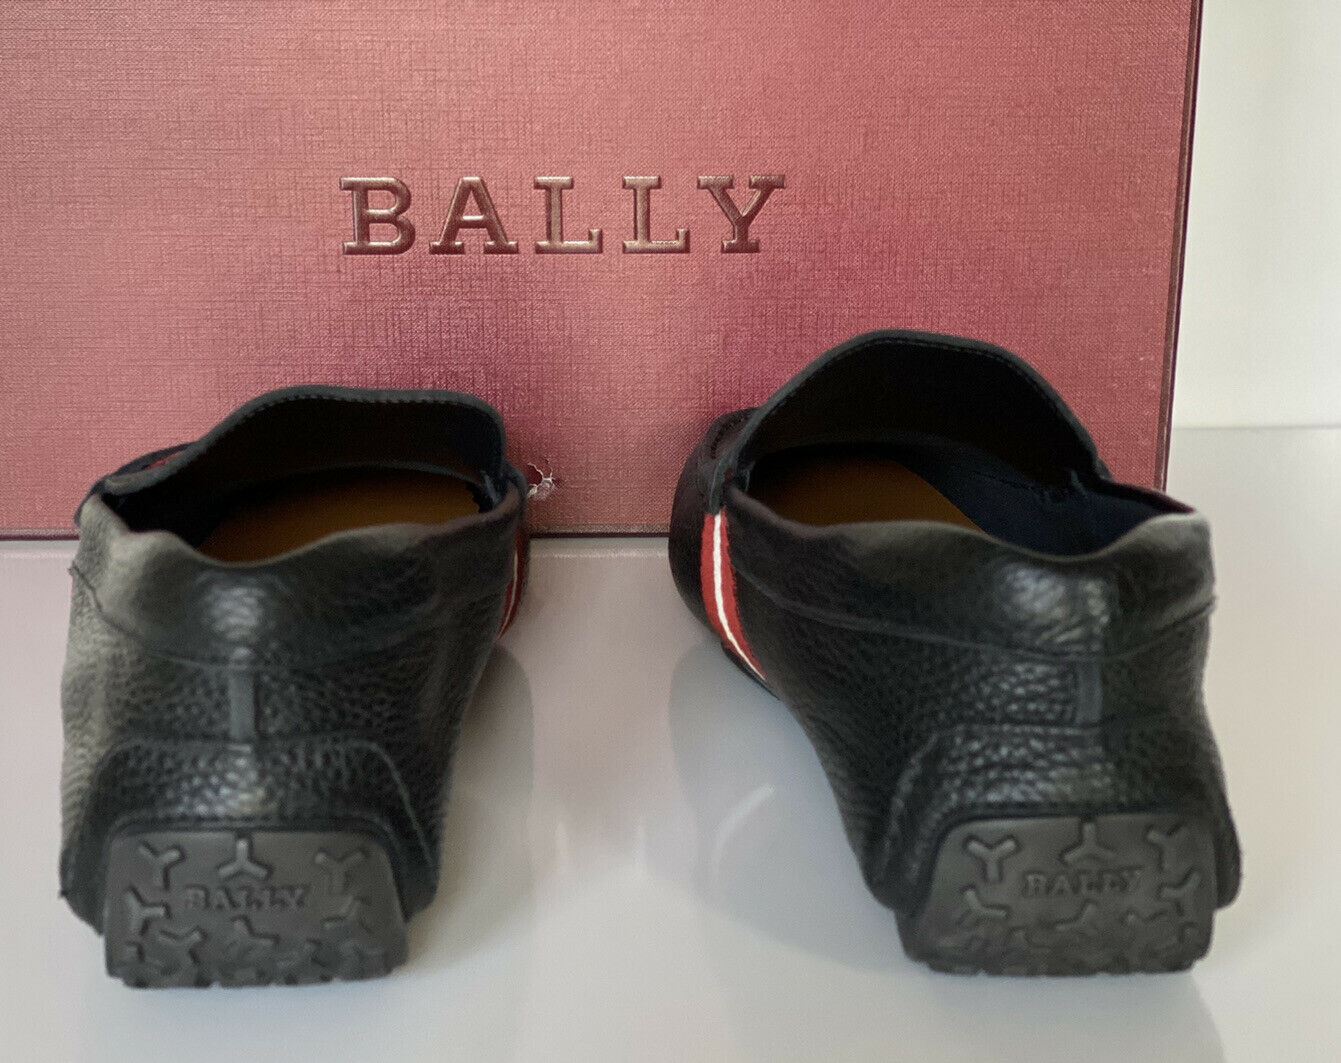 NIB Bally Herren-Fahrerschuhe aus genarbtem Rindsleder, Schwarz, 11 D, US 6228298, Italien 